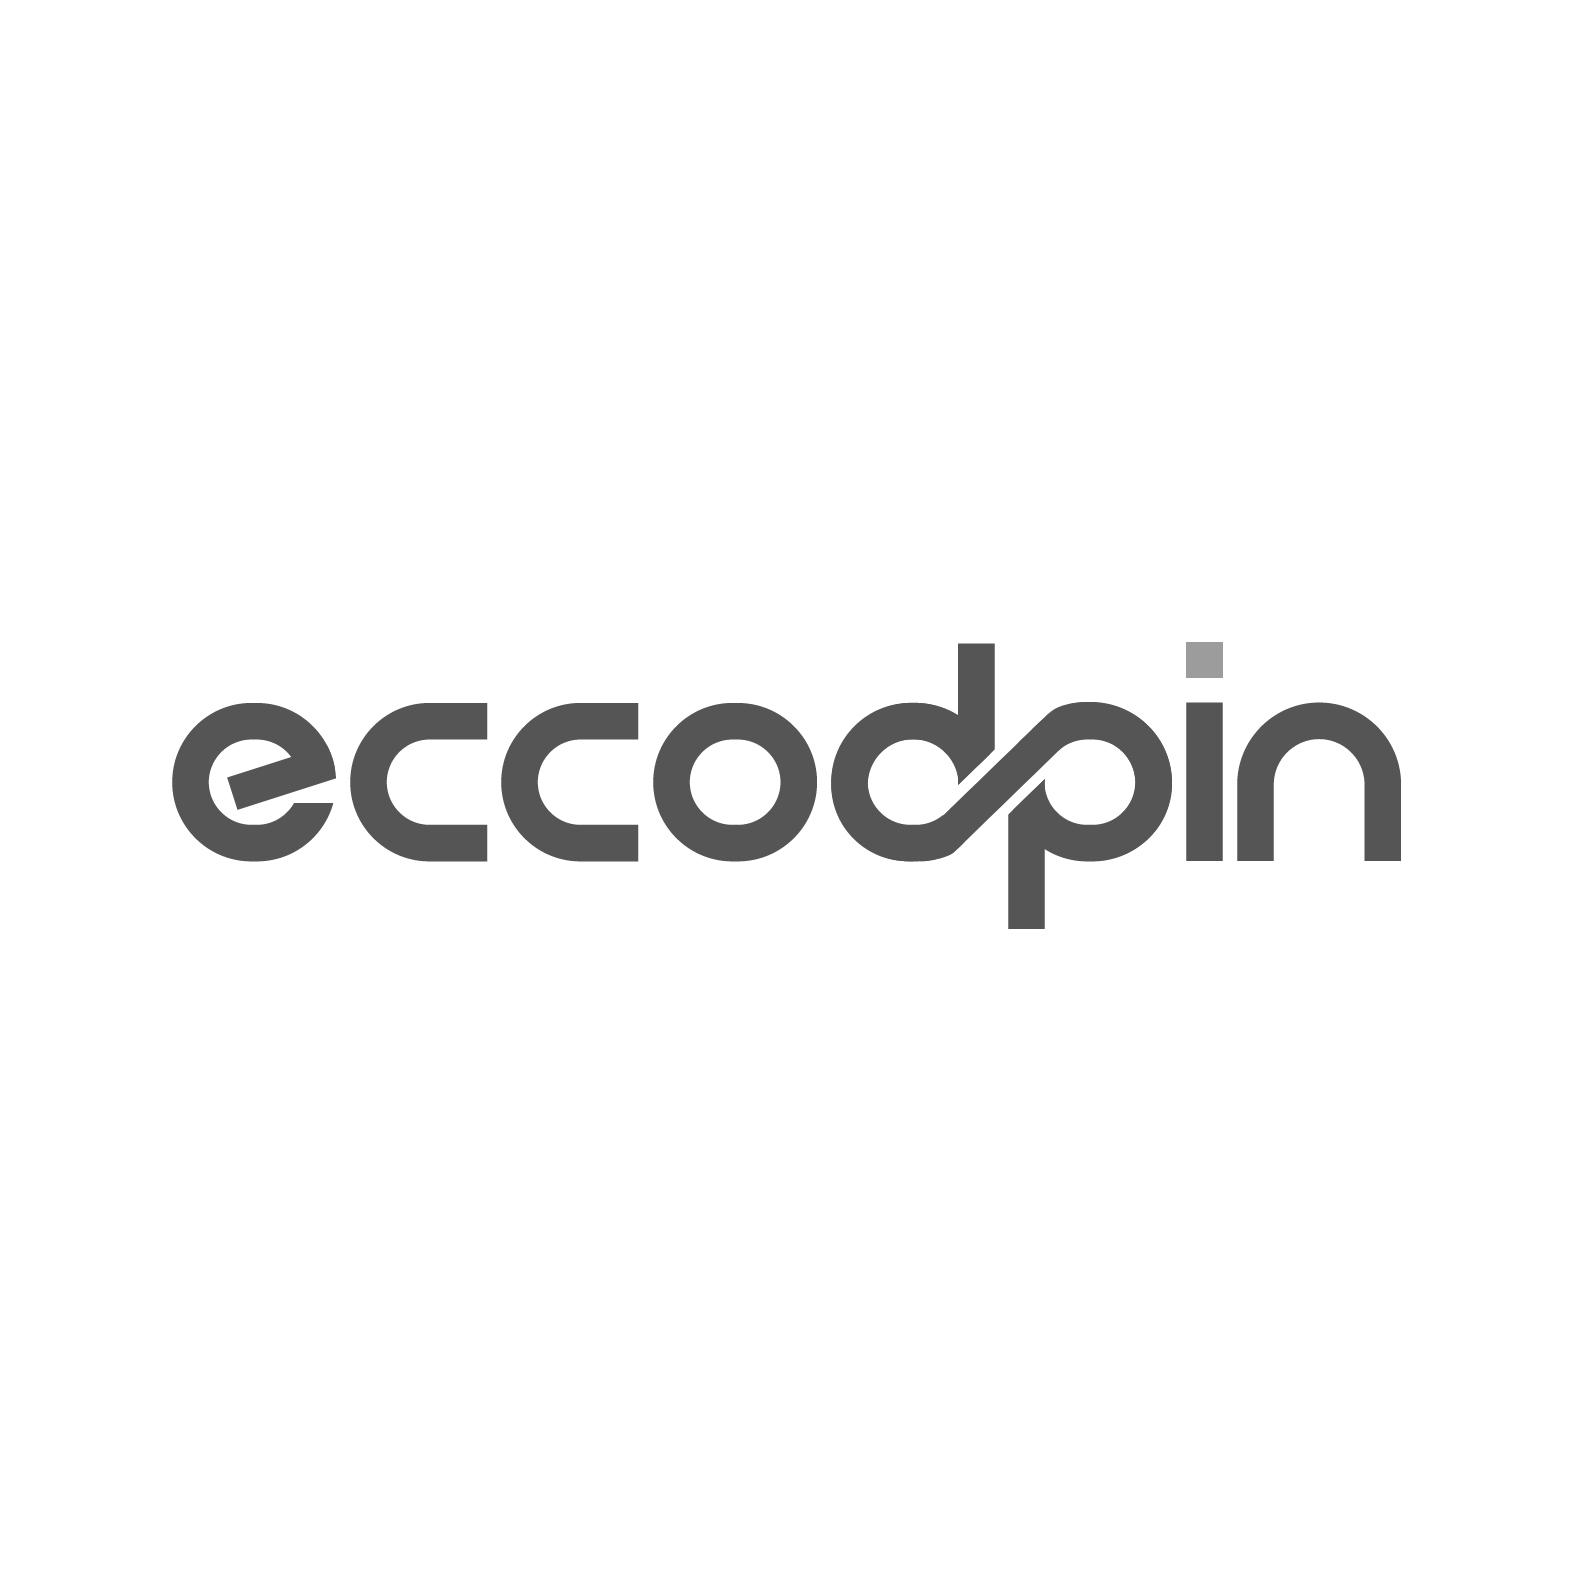 ECCODPIN